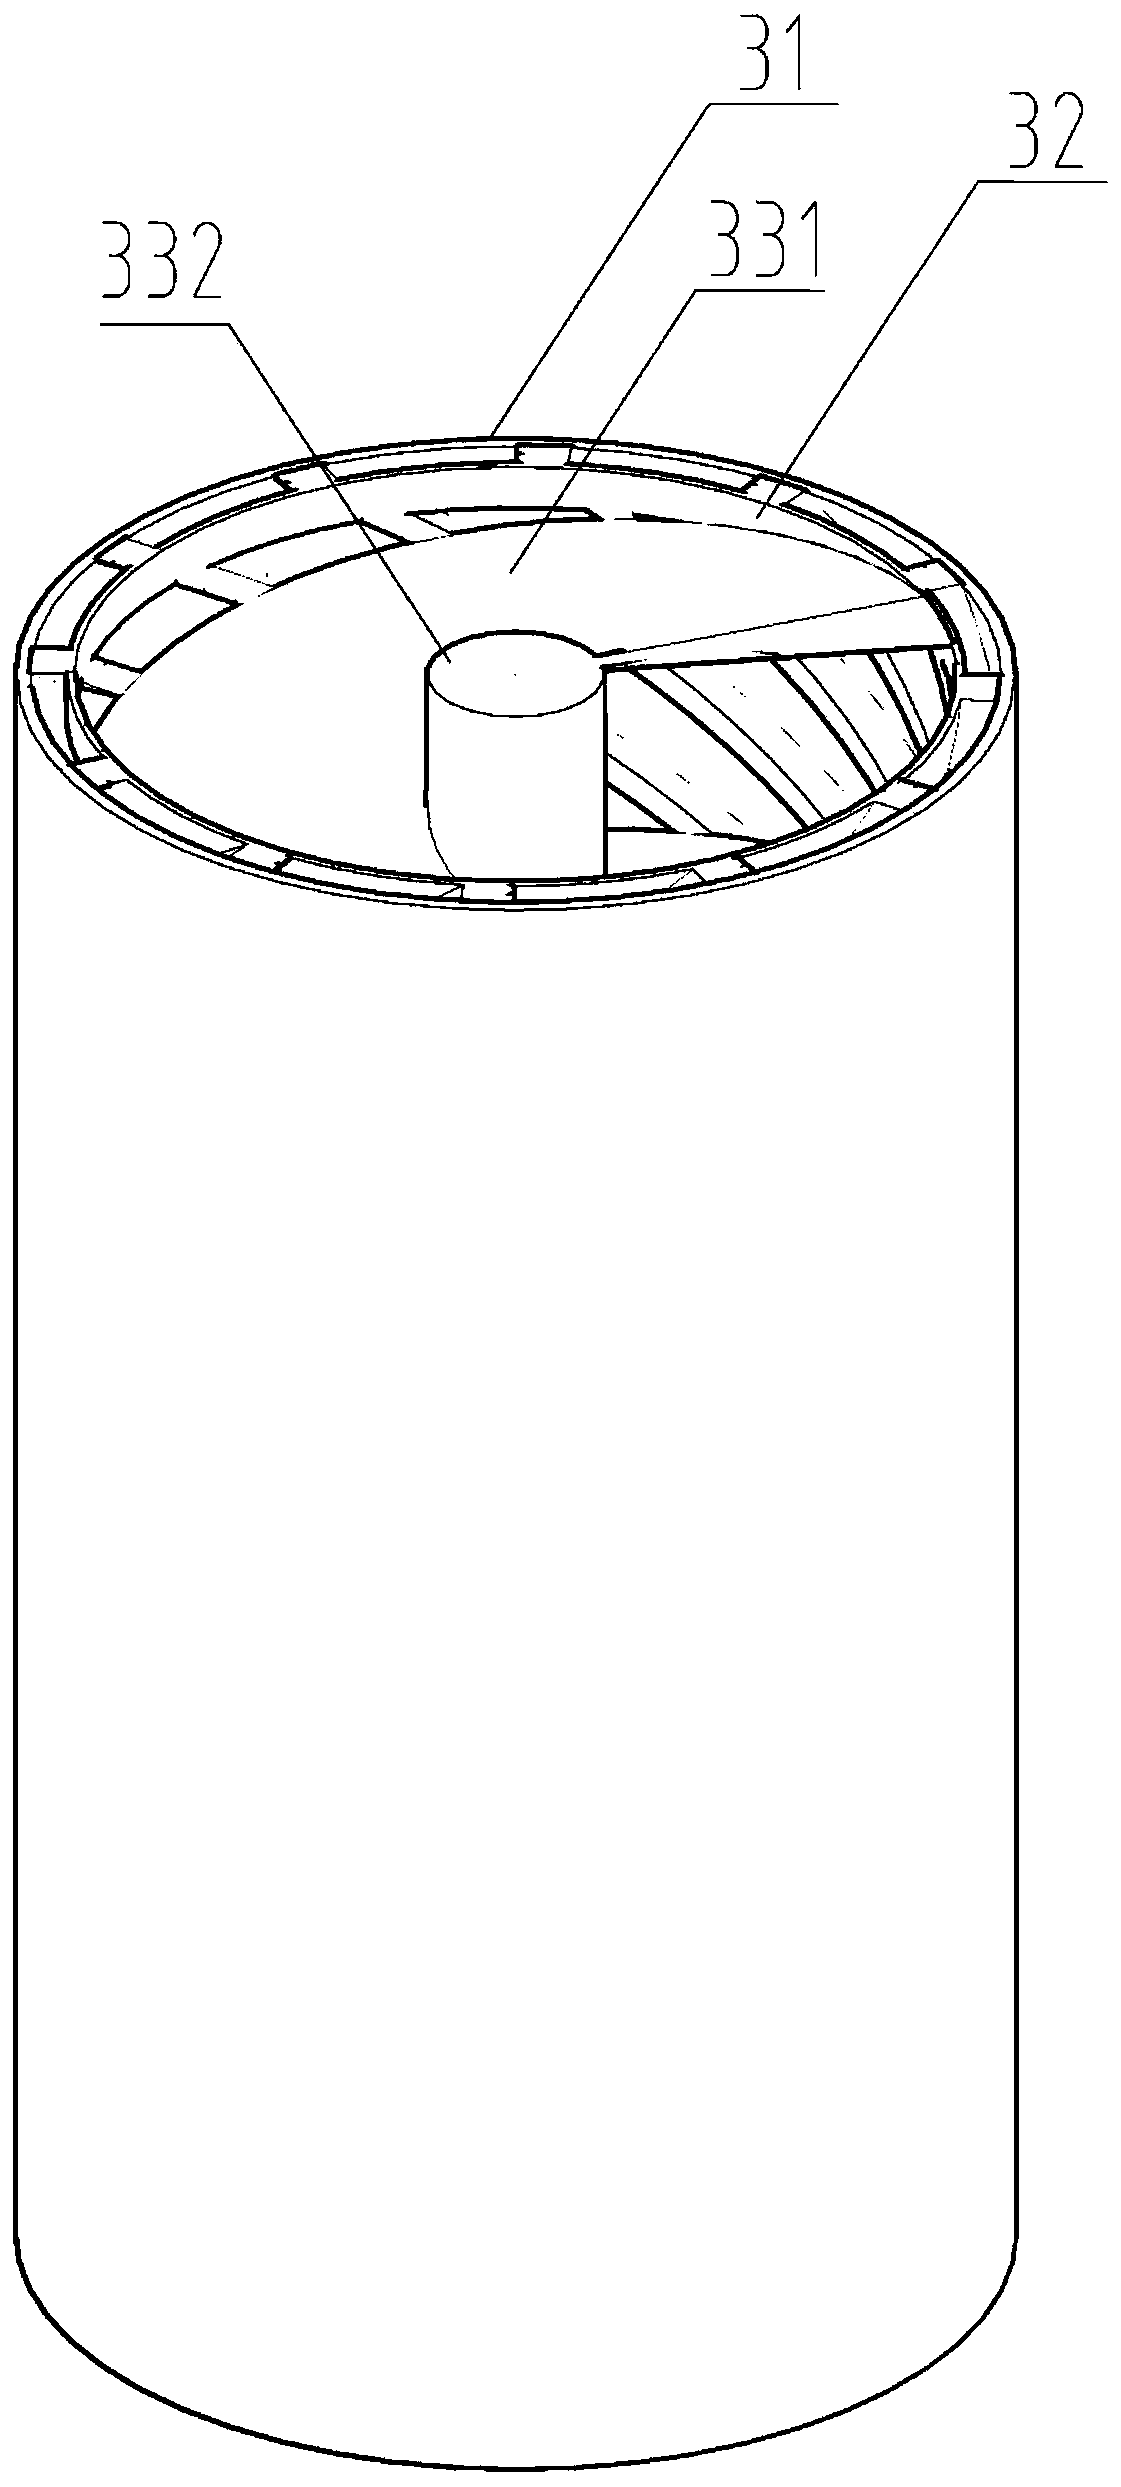 Spiral dedusting demister, demisting device and absorption tower